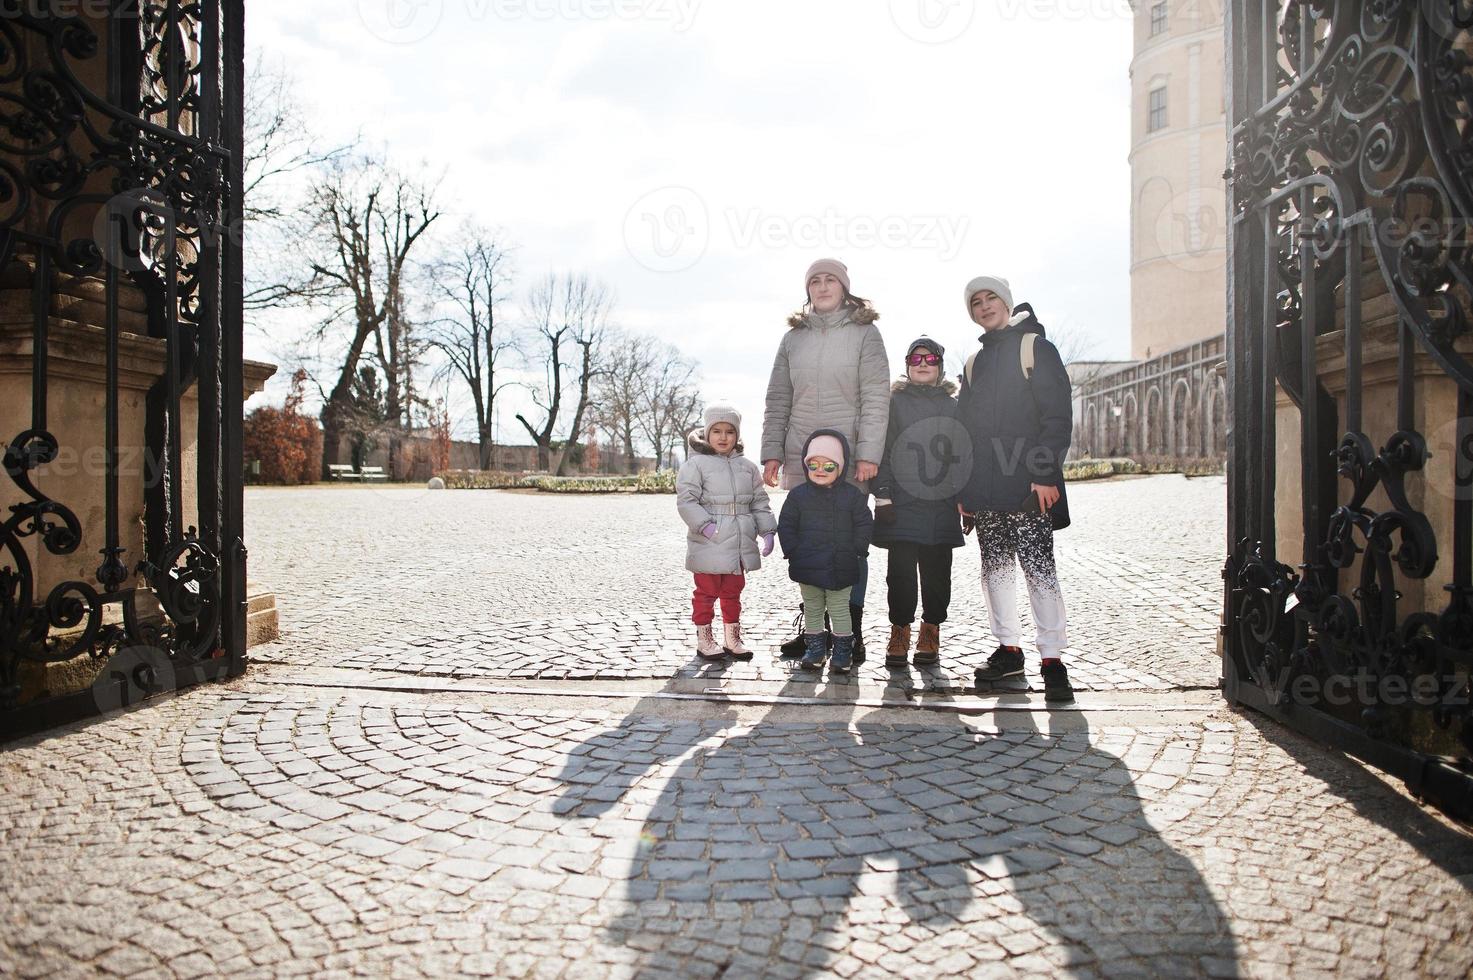 Family walking at historical Mikulov Castle, Moravia, Czech Republic. Old European town. photo